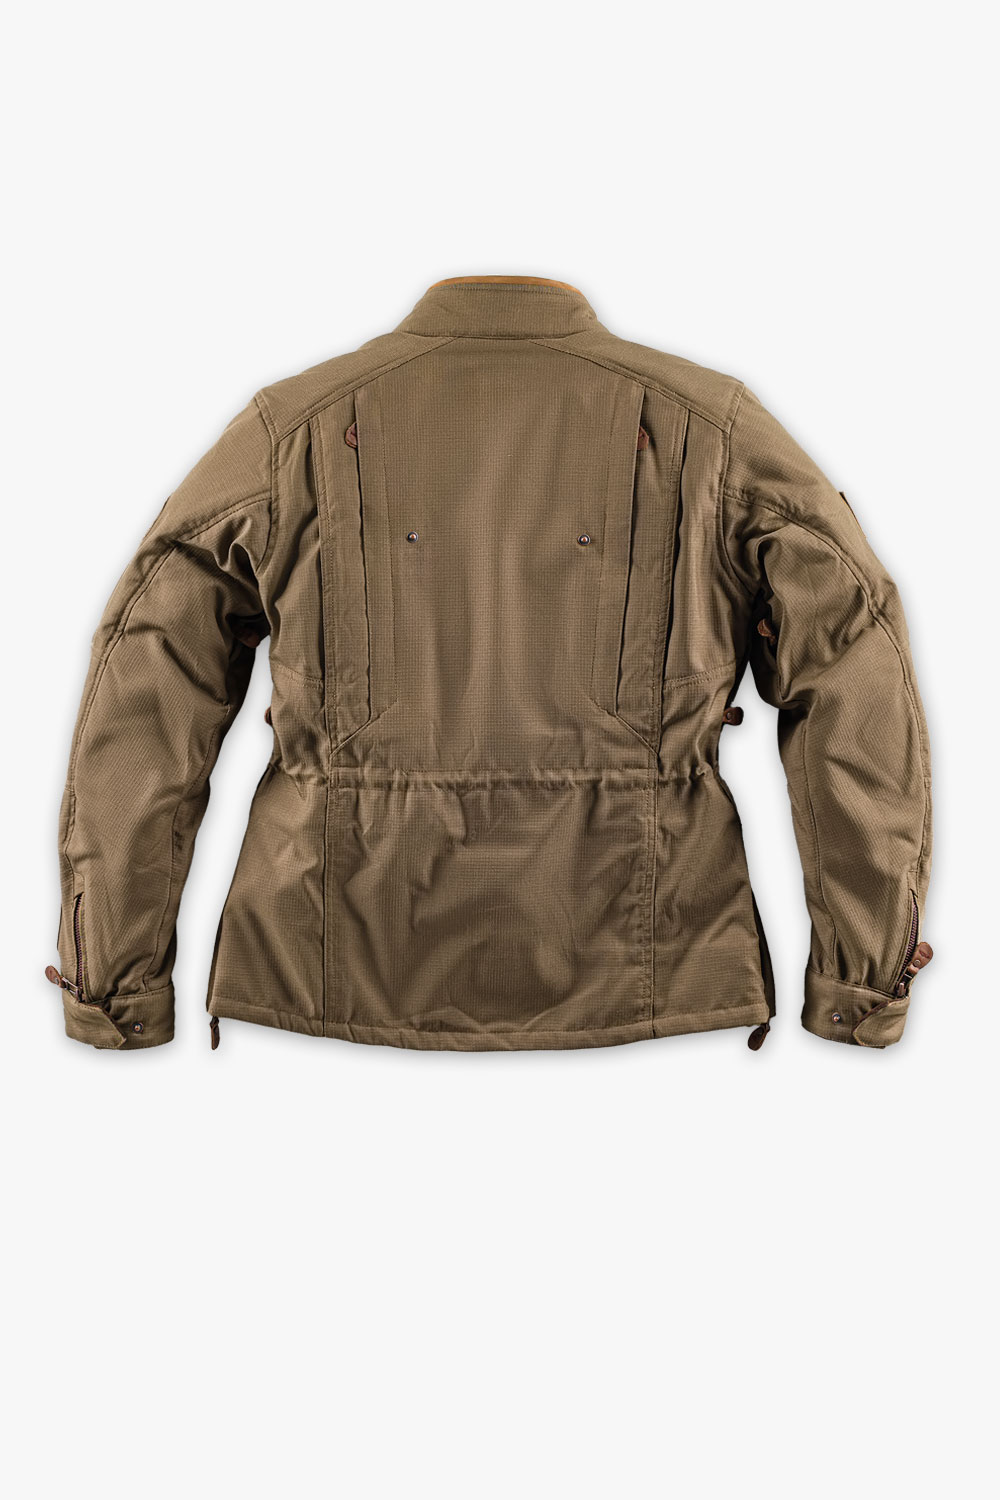 Dryzone suit brown jacket back